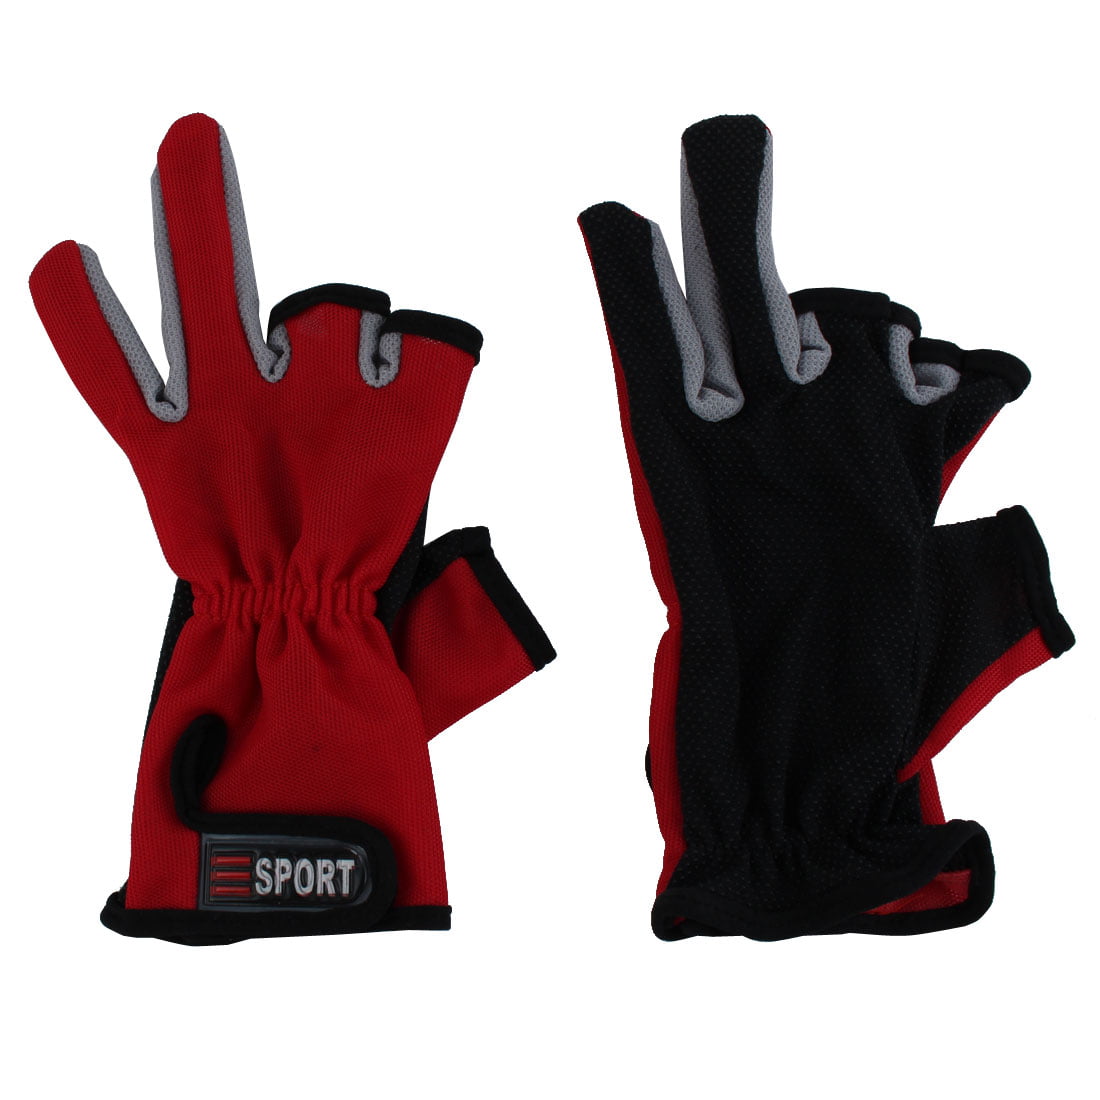 Fingerless Gloves 3 Cut Fingers  For Fishing Hunting Outdoor Anti Slip Hand Gear 